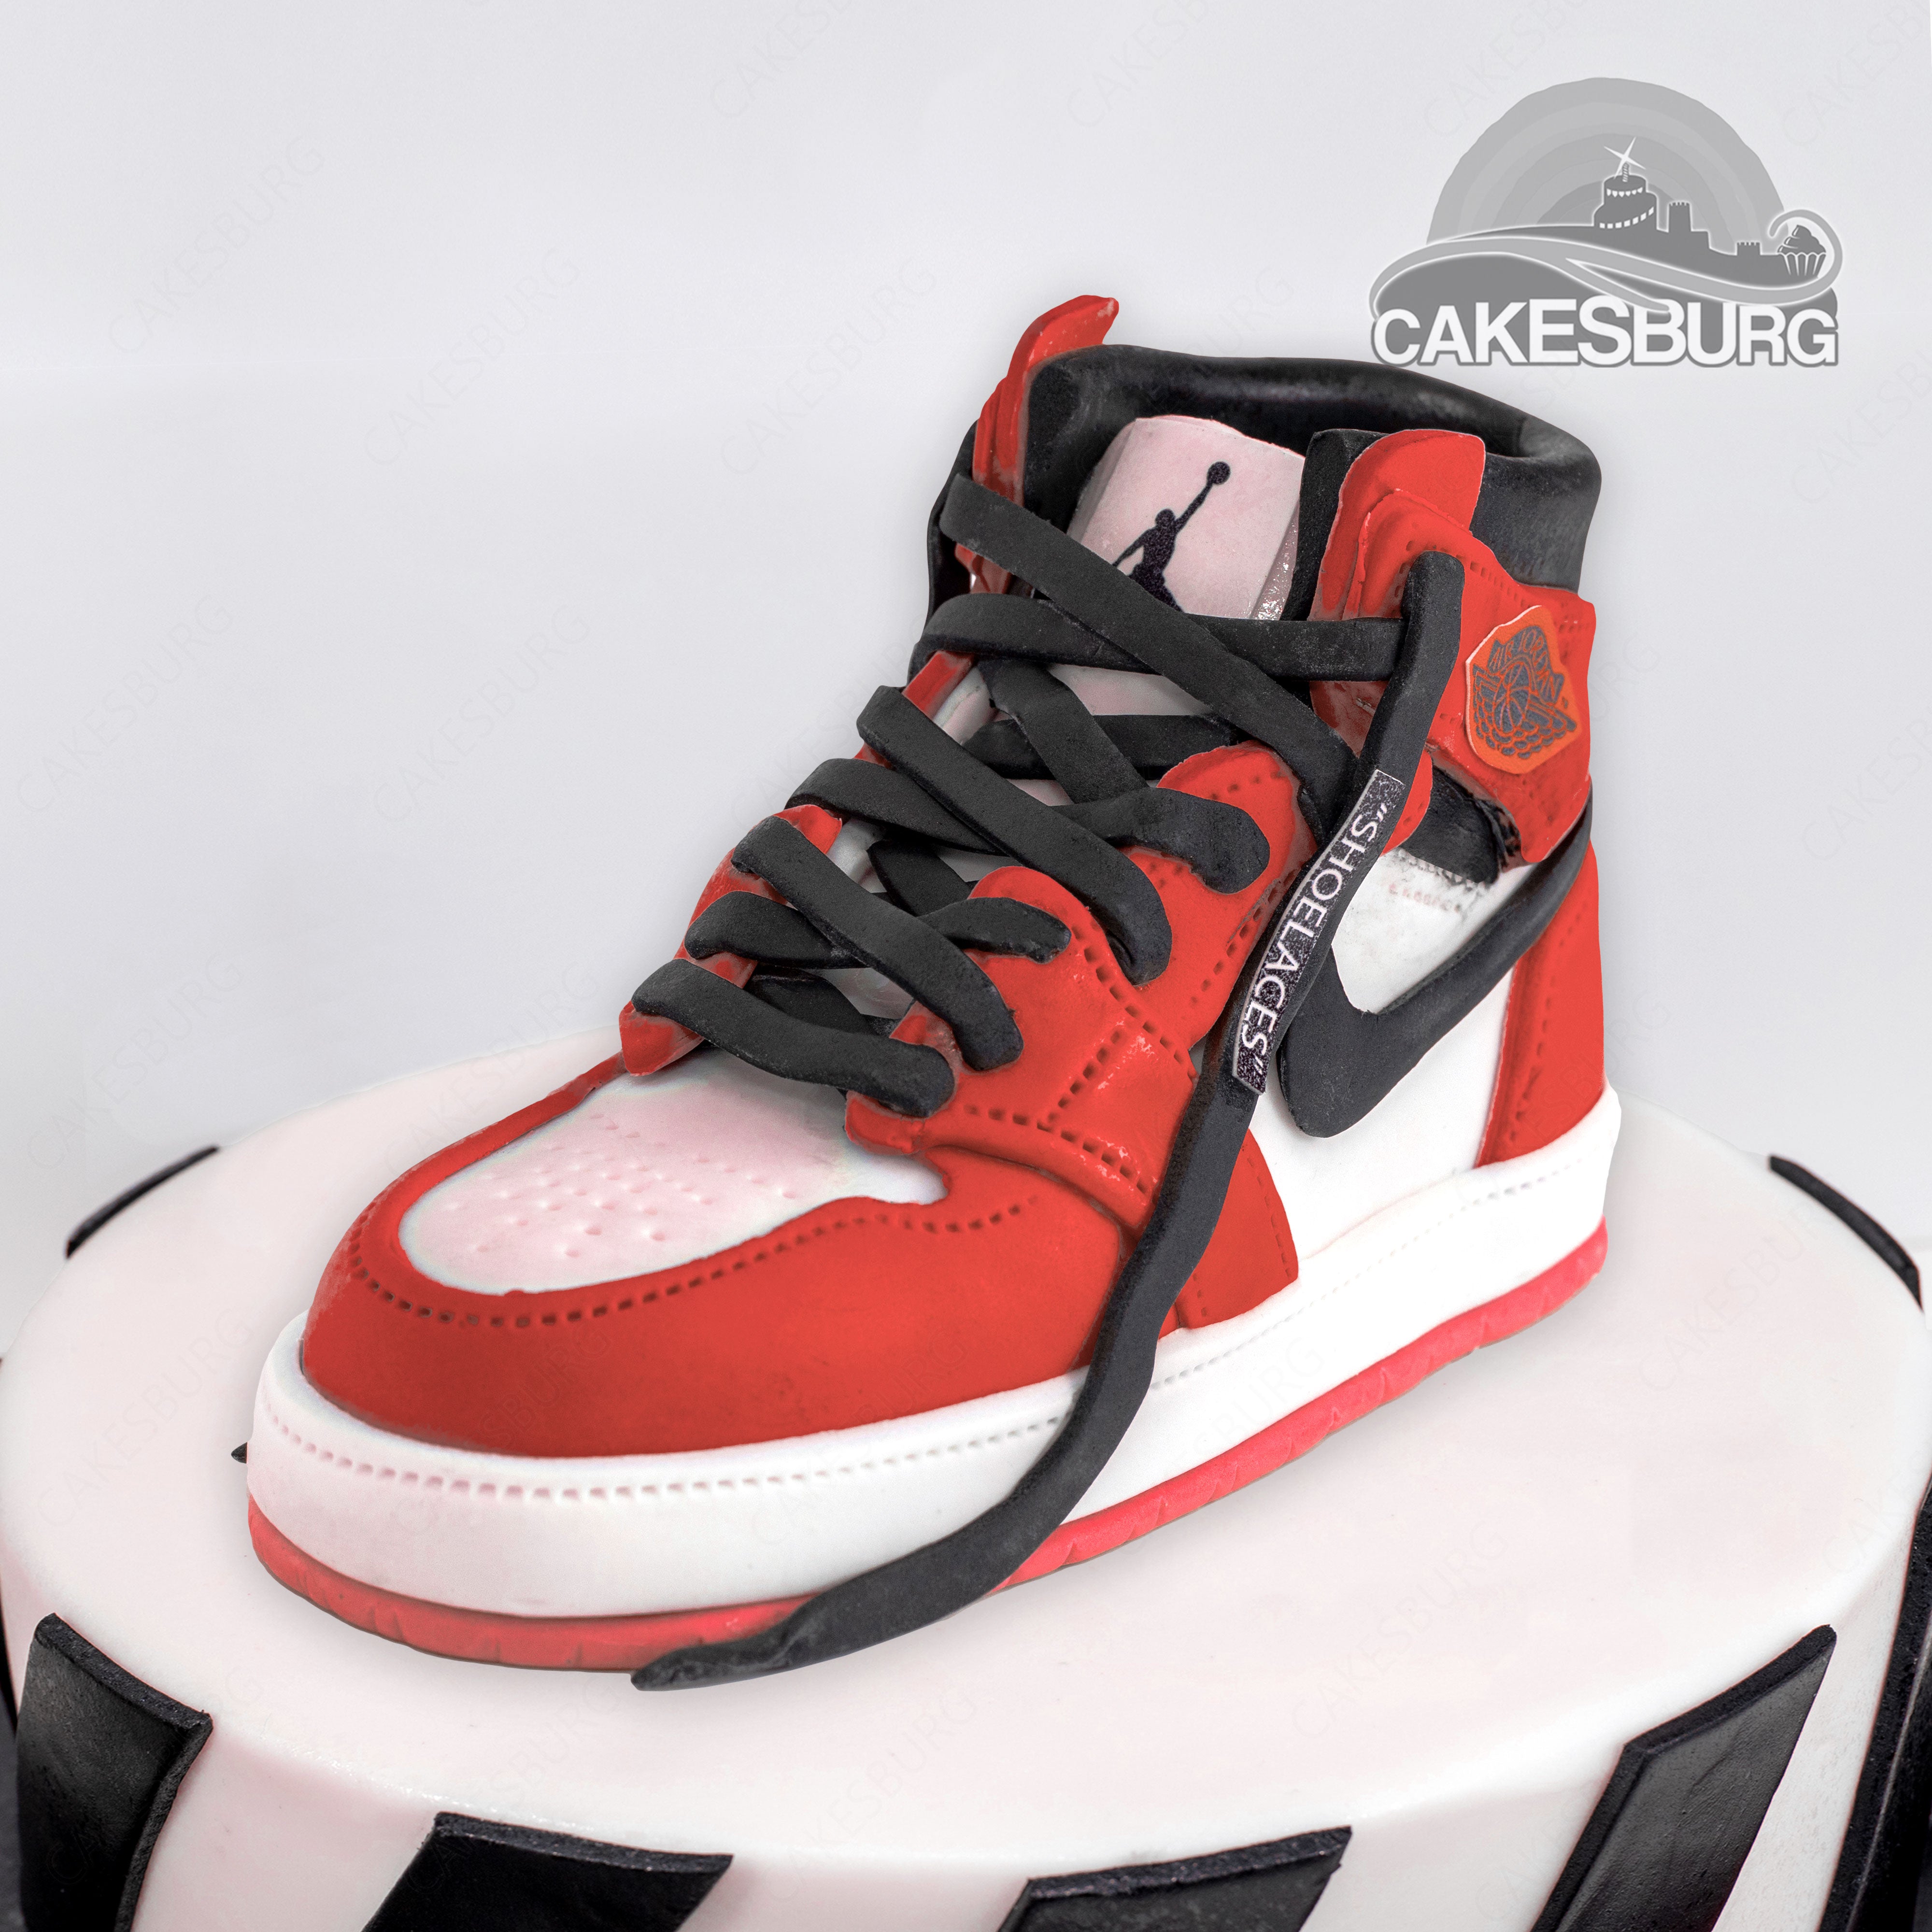 Shoe Box & High Heel Shoe Cake | Little Hill Cakes